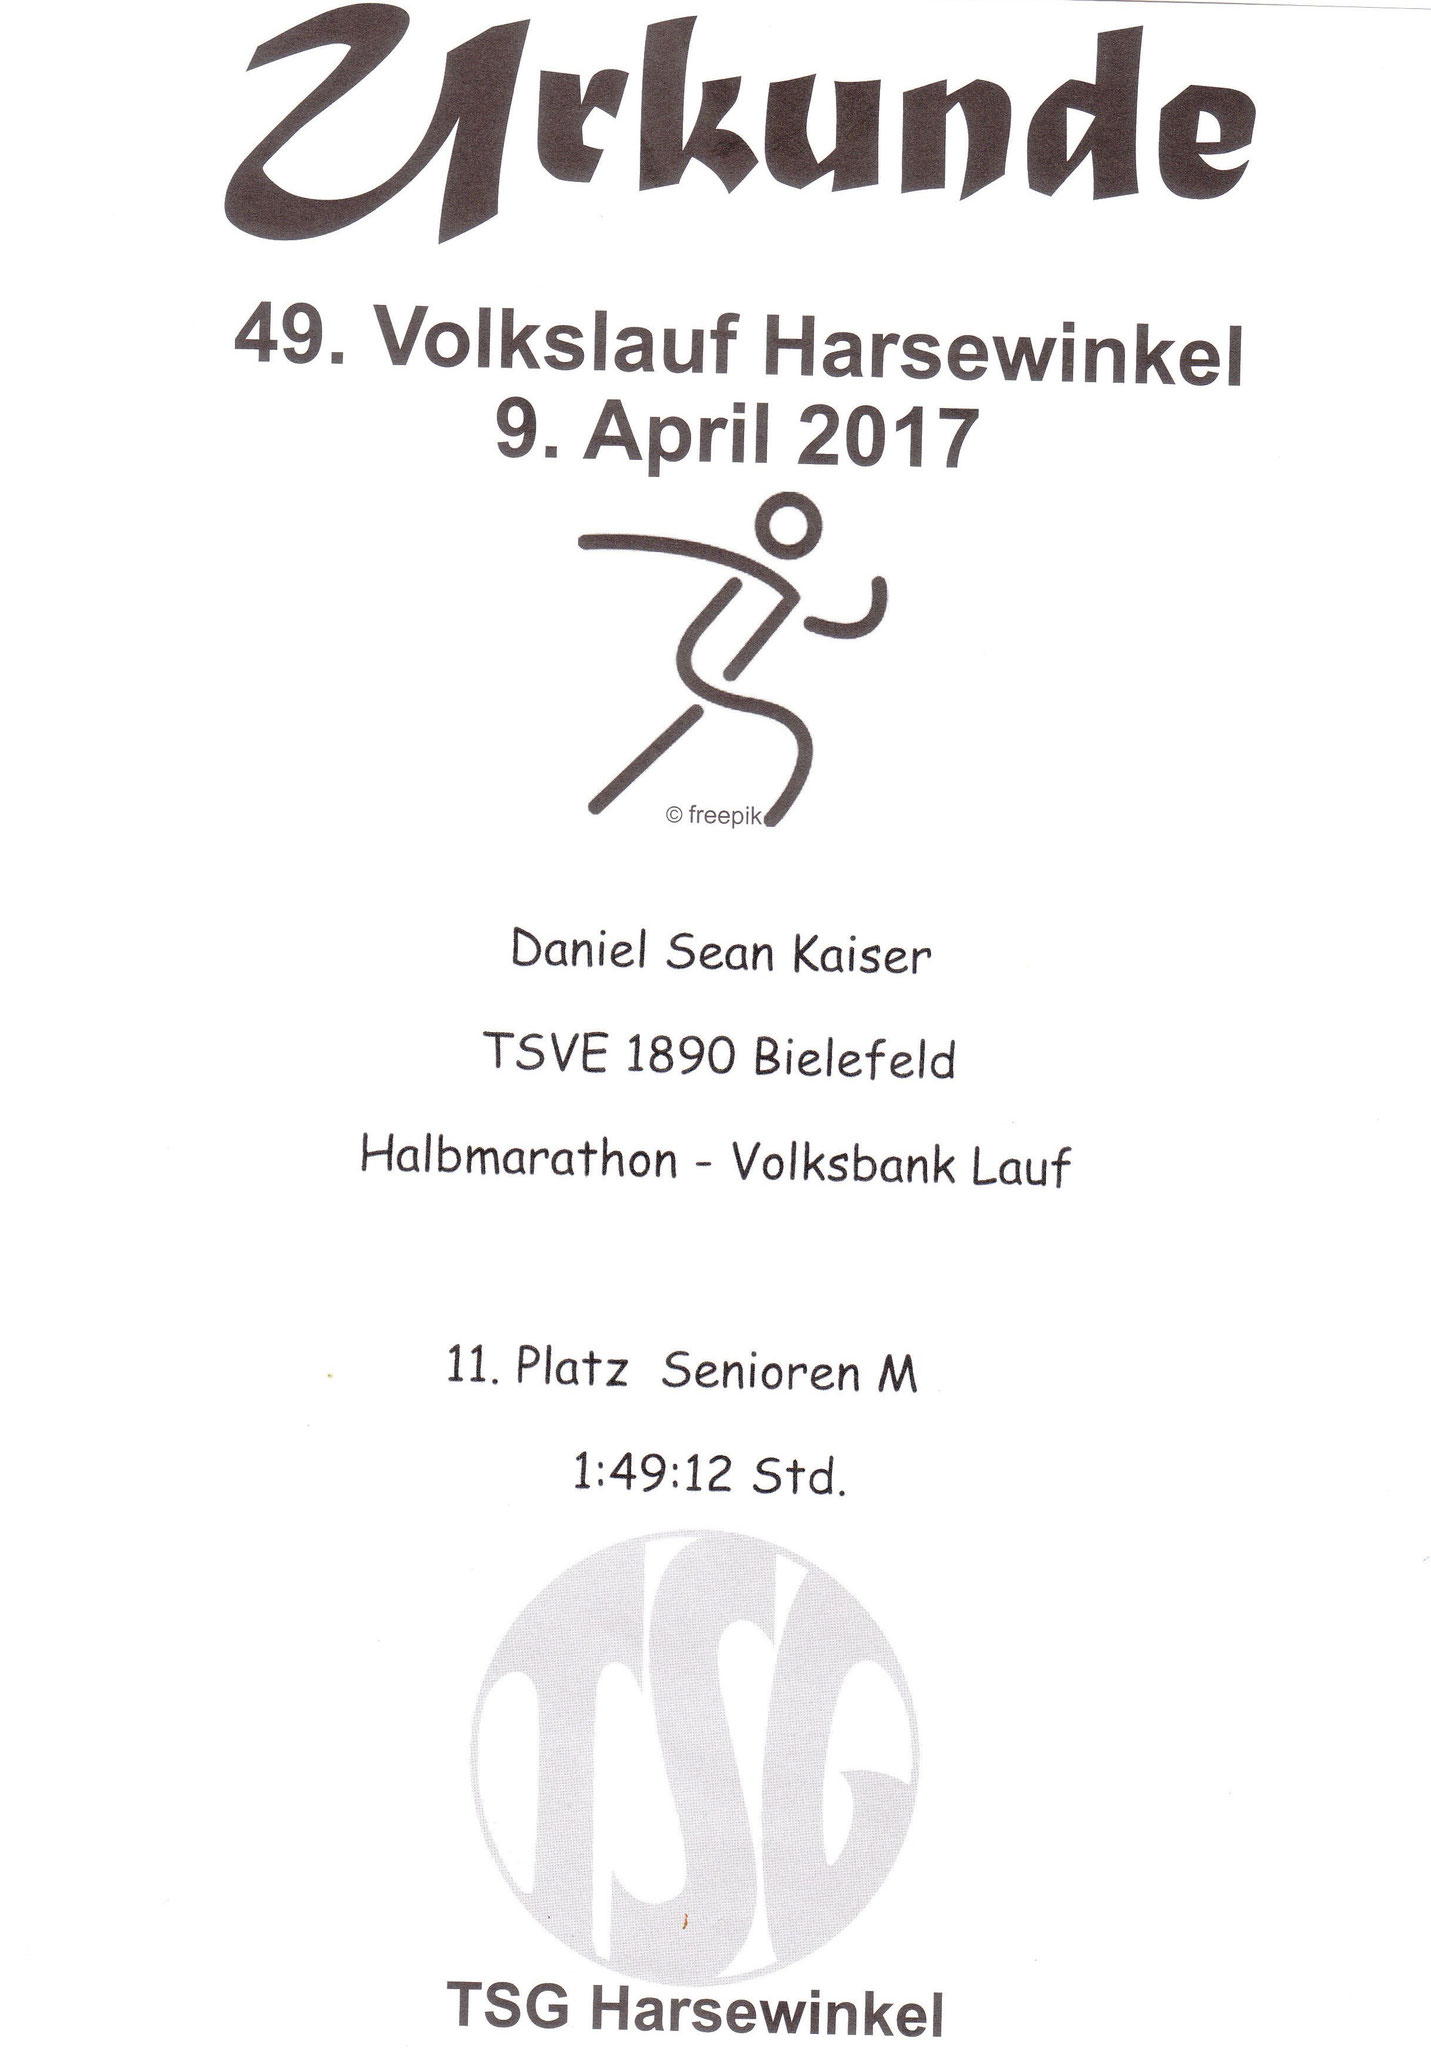 Volkslauf Harsewinkel (Halbmarathon) 2017 - Urkunde